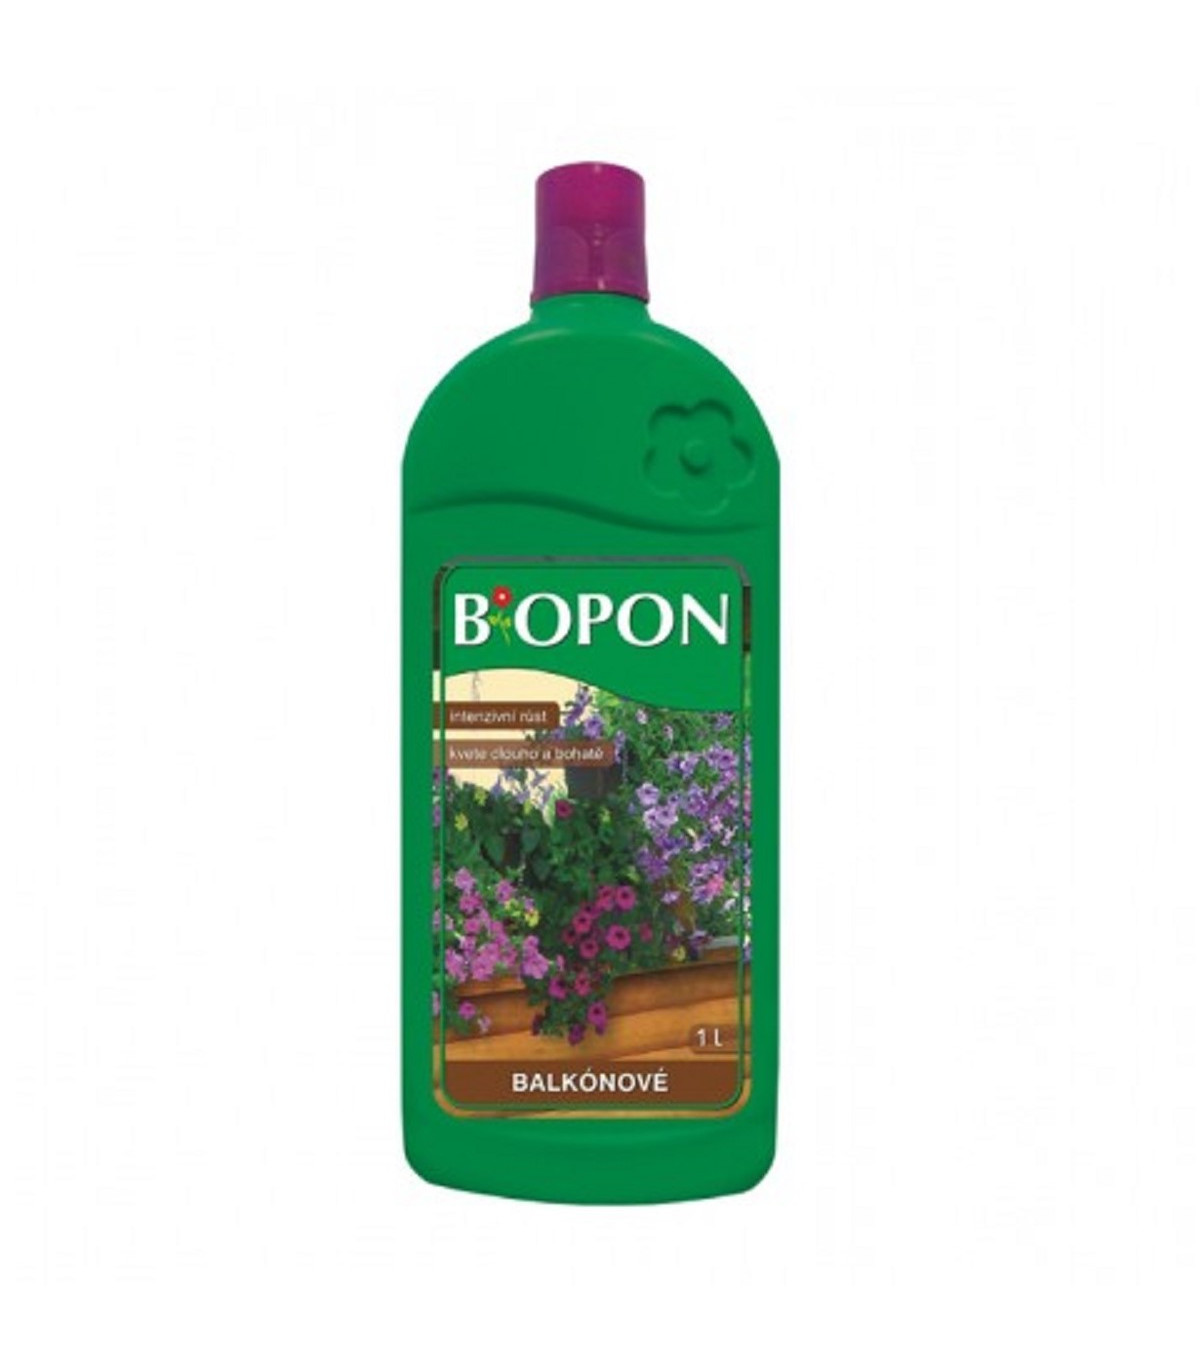 Hnojivo na balkónové rostliny - BoPon - tekuté hnojivo - 1 l